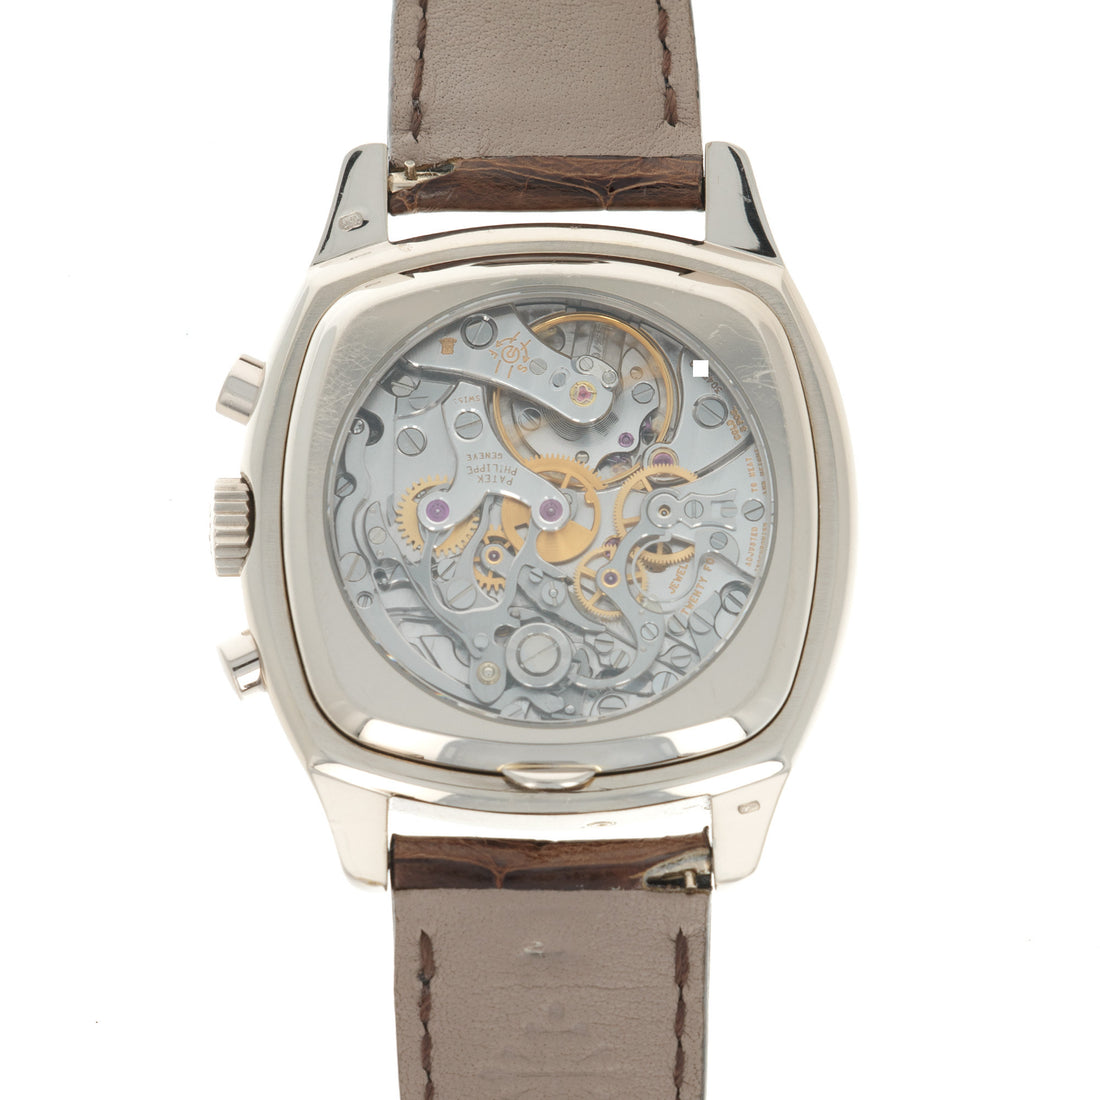 Patek Philippe White Gold Perpetual Calendar Chrono Watch Ref. 5020